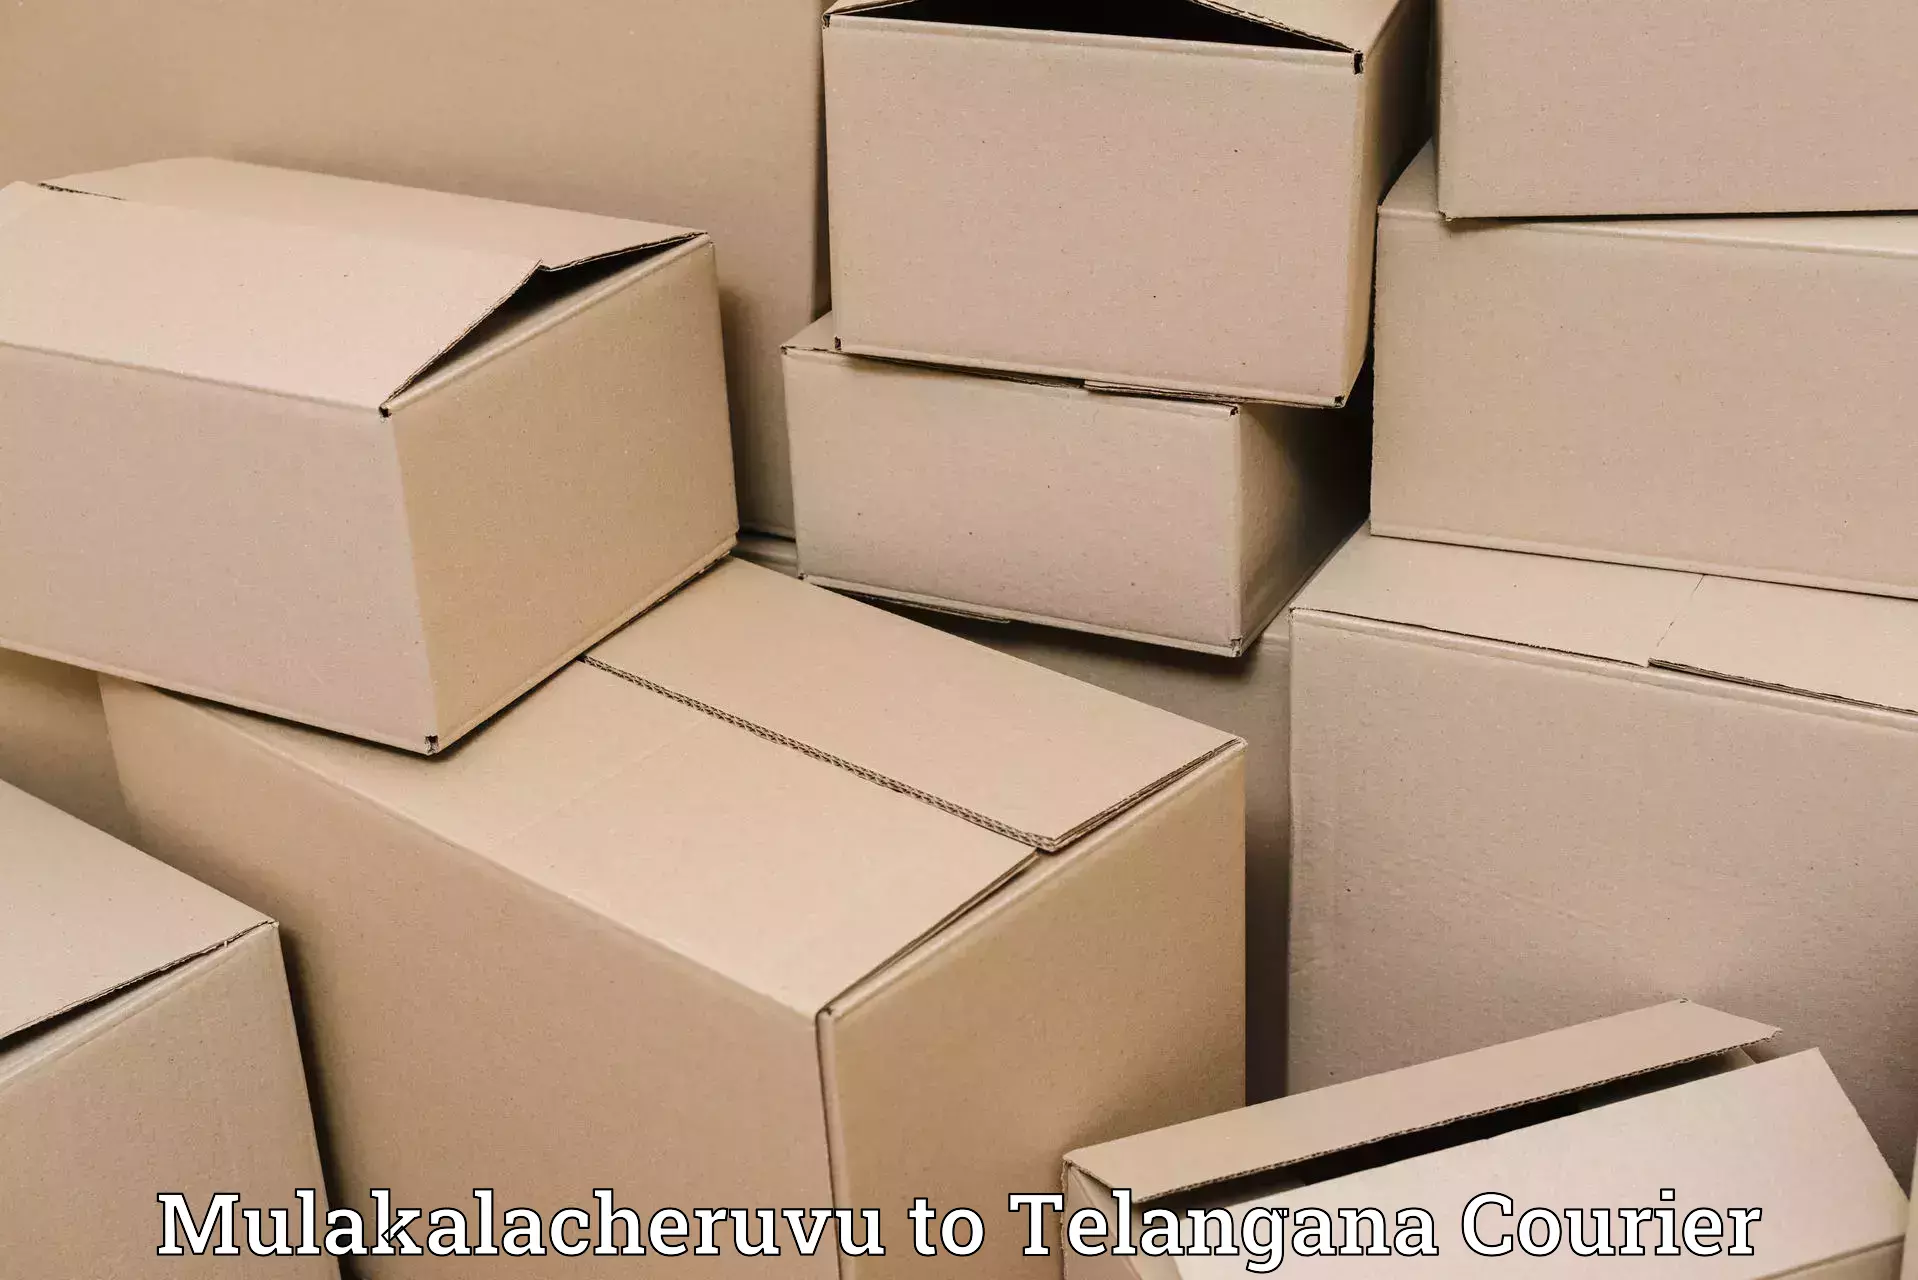 Cargo delivery service Mulakalacheruvu to Netrang